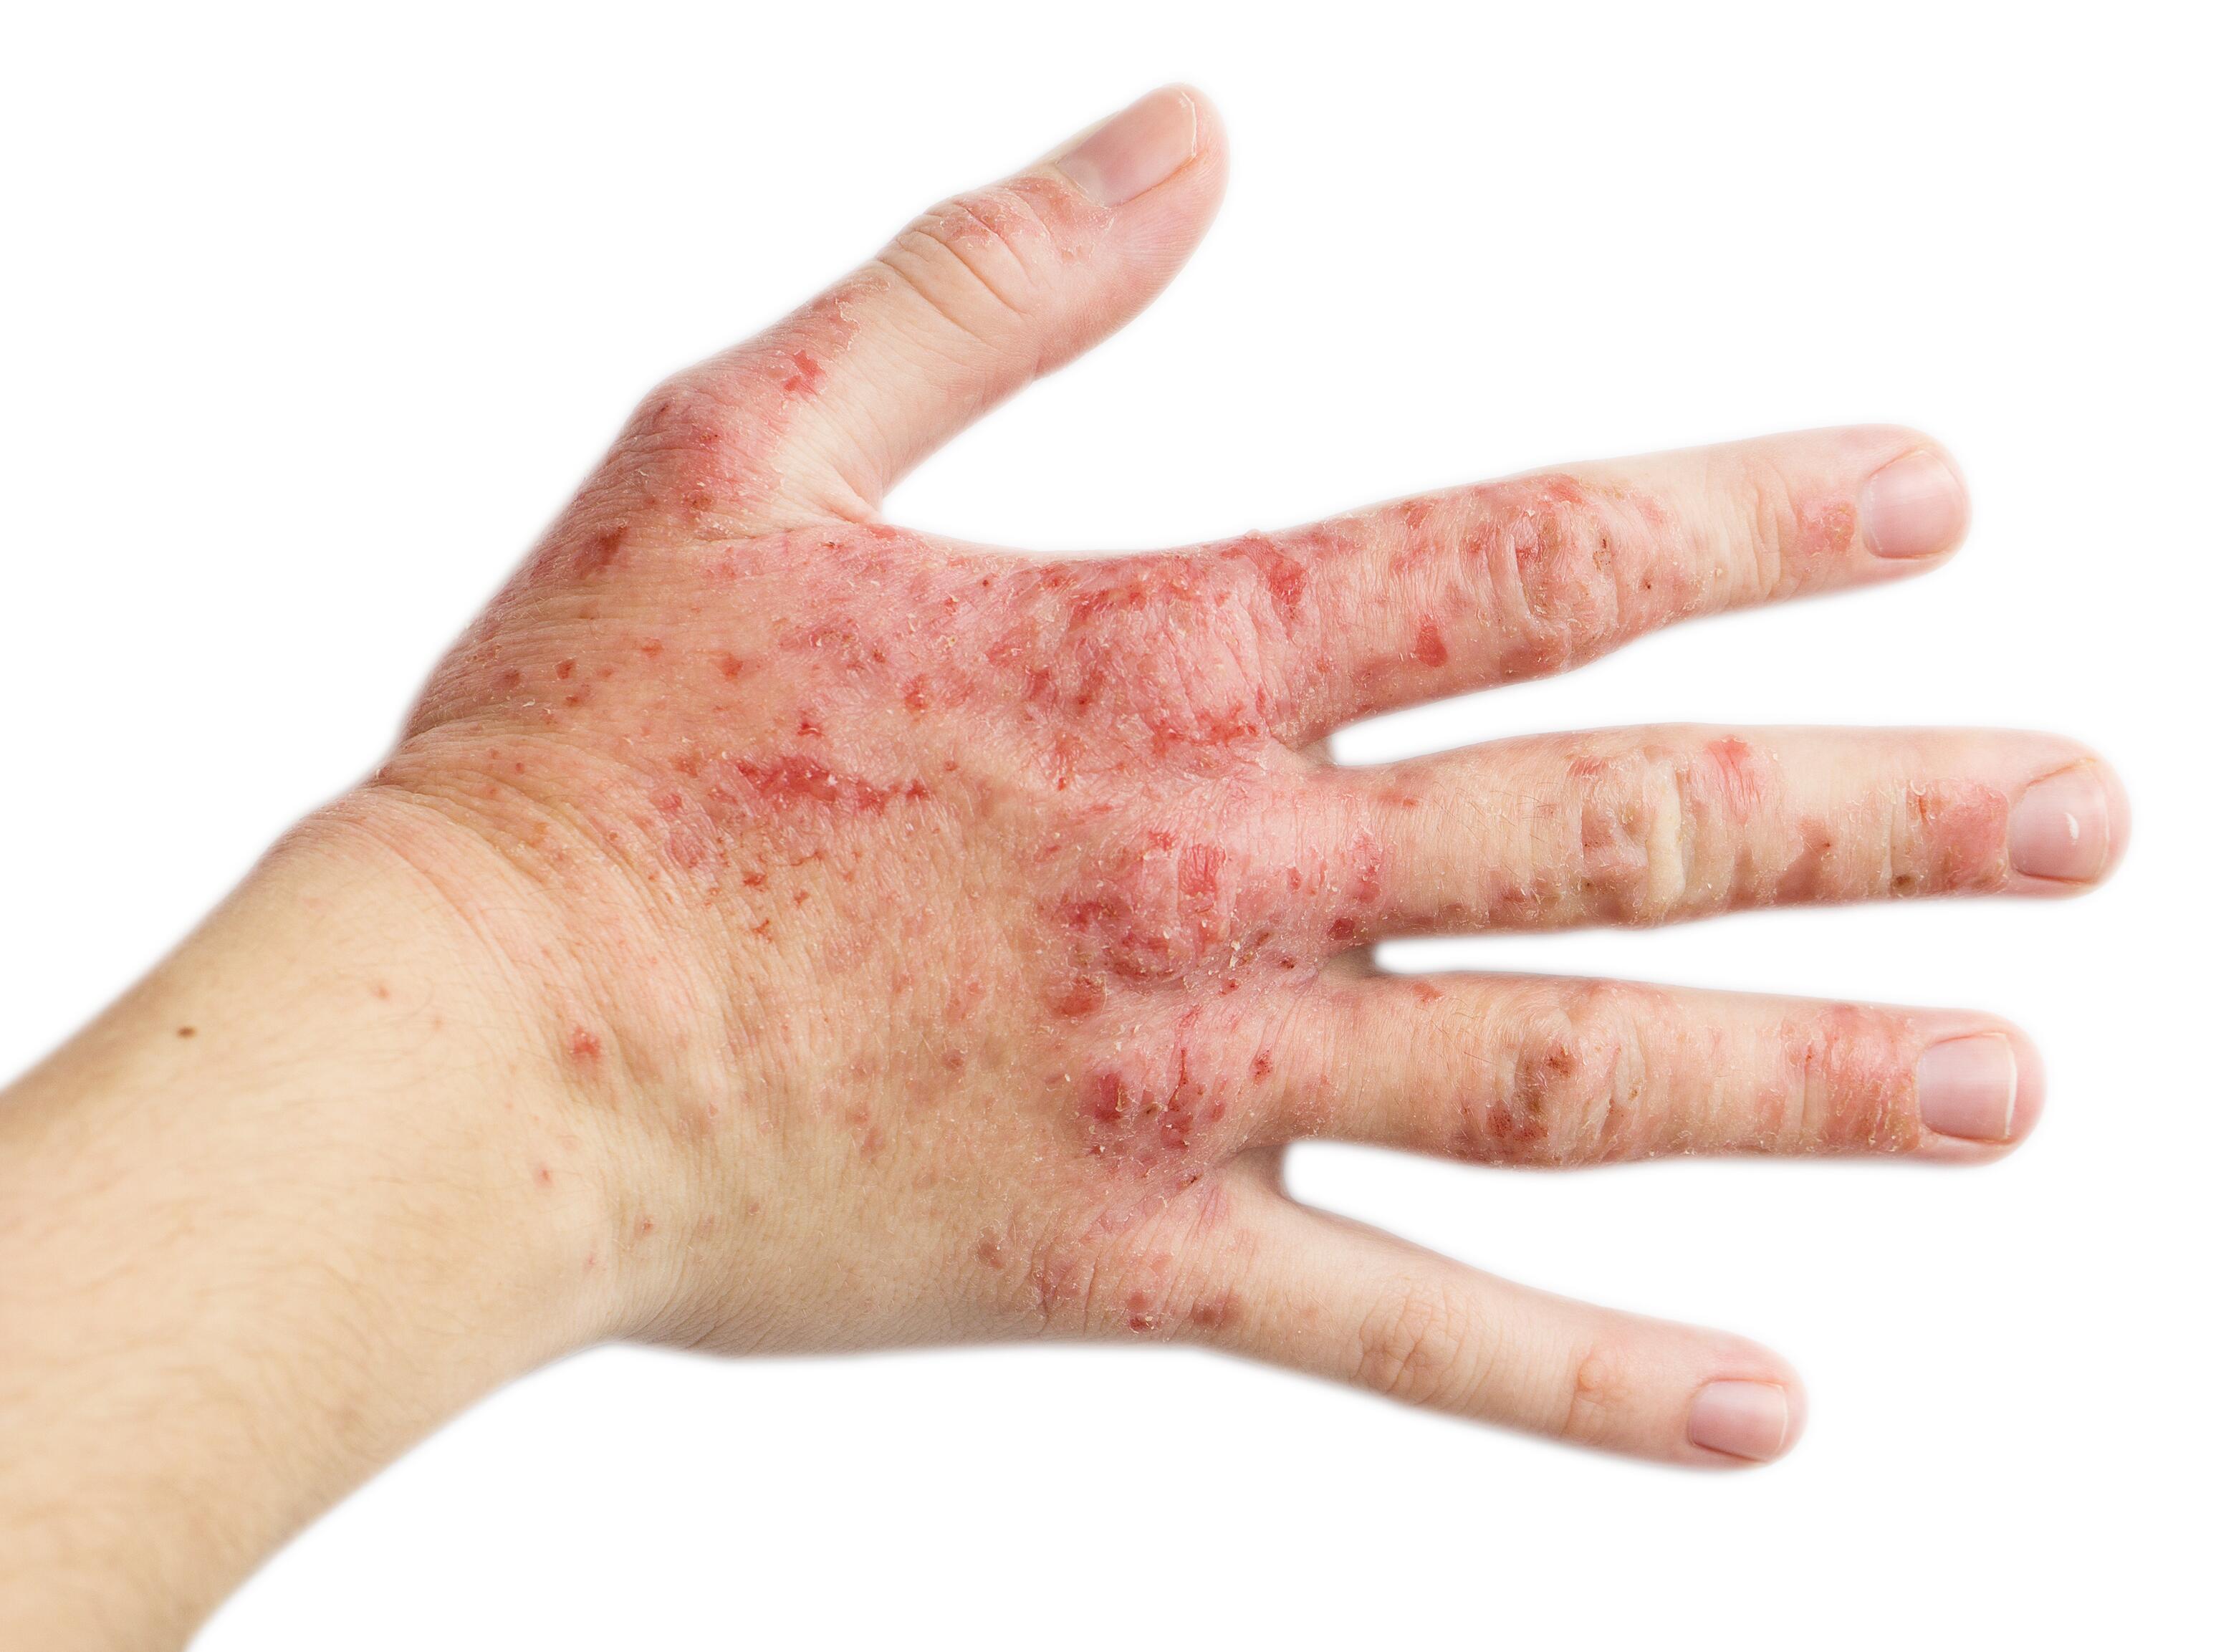 Hand with irritant contact eczema